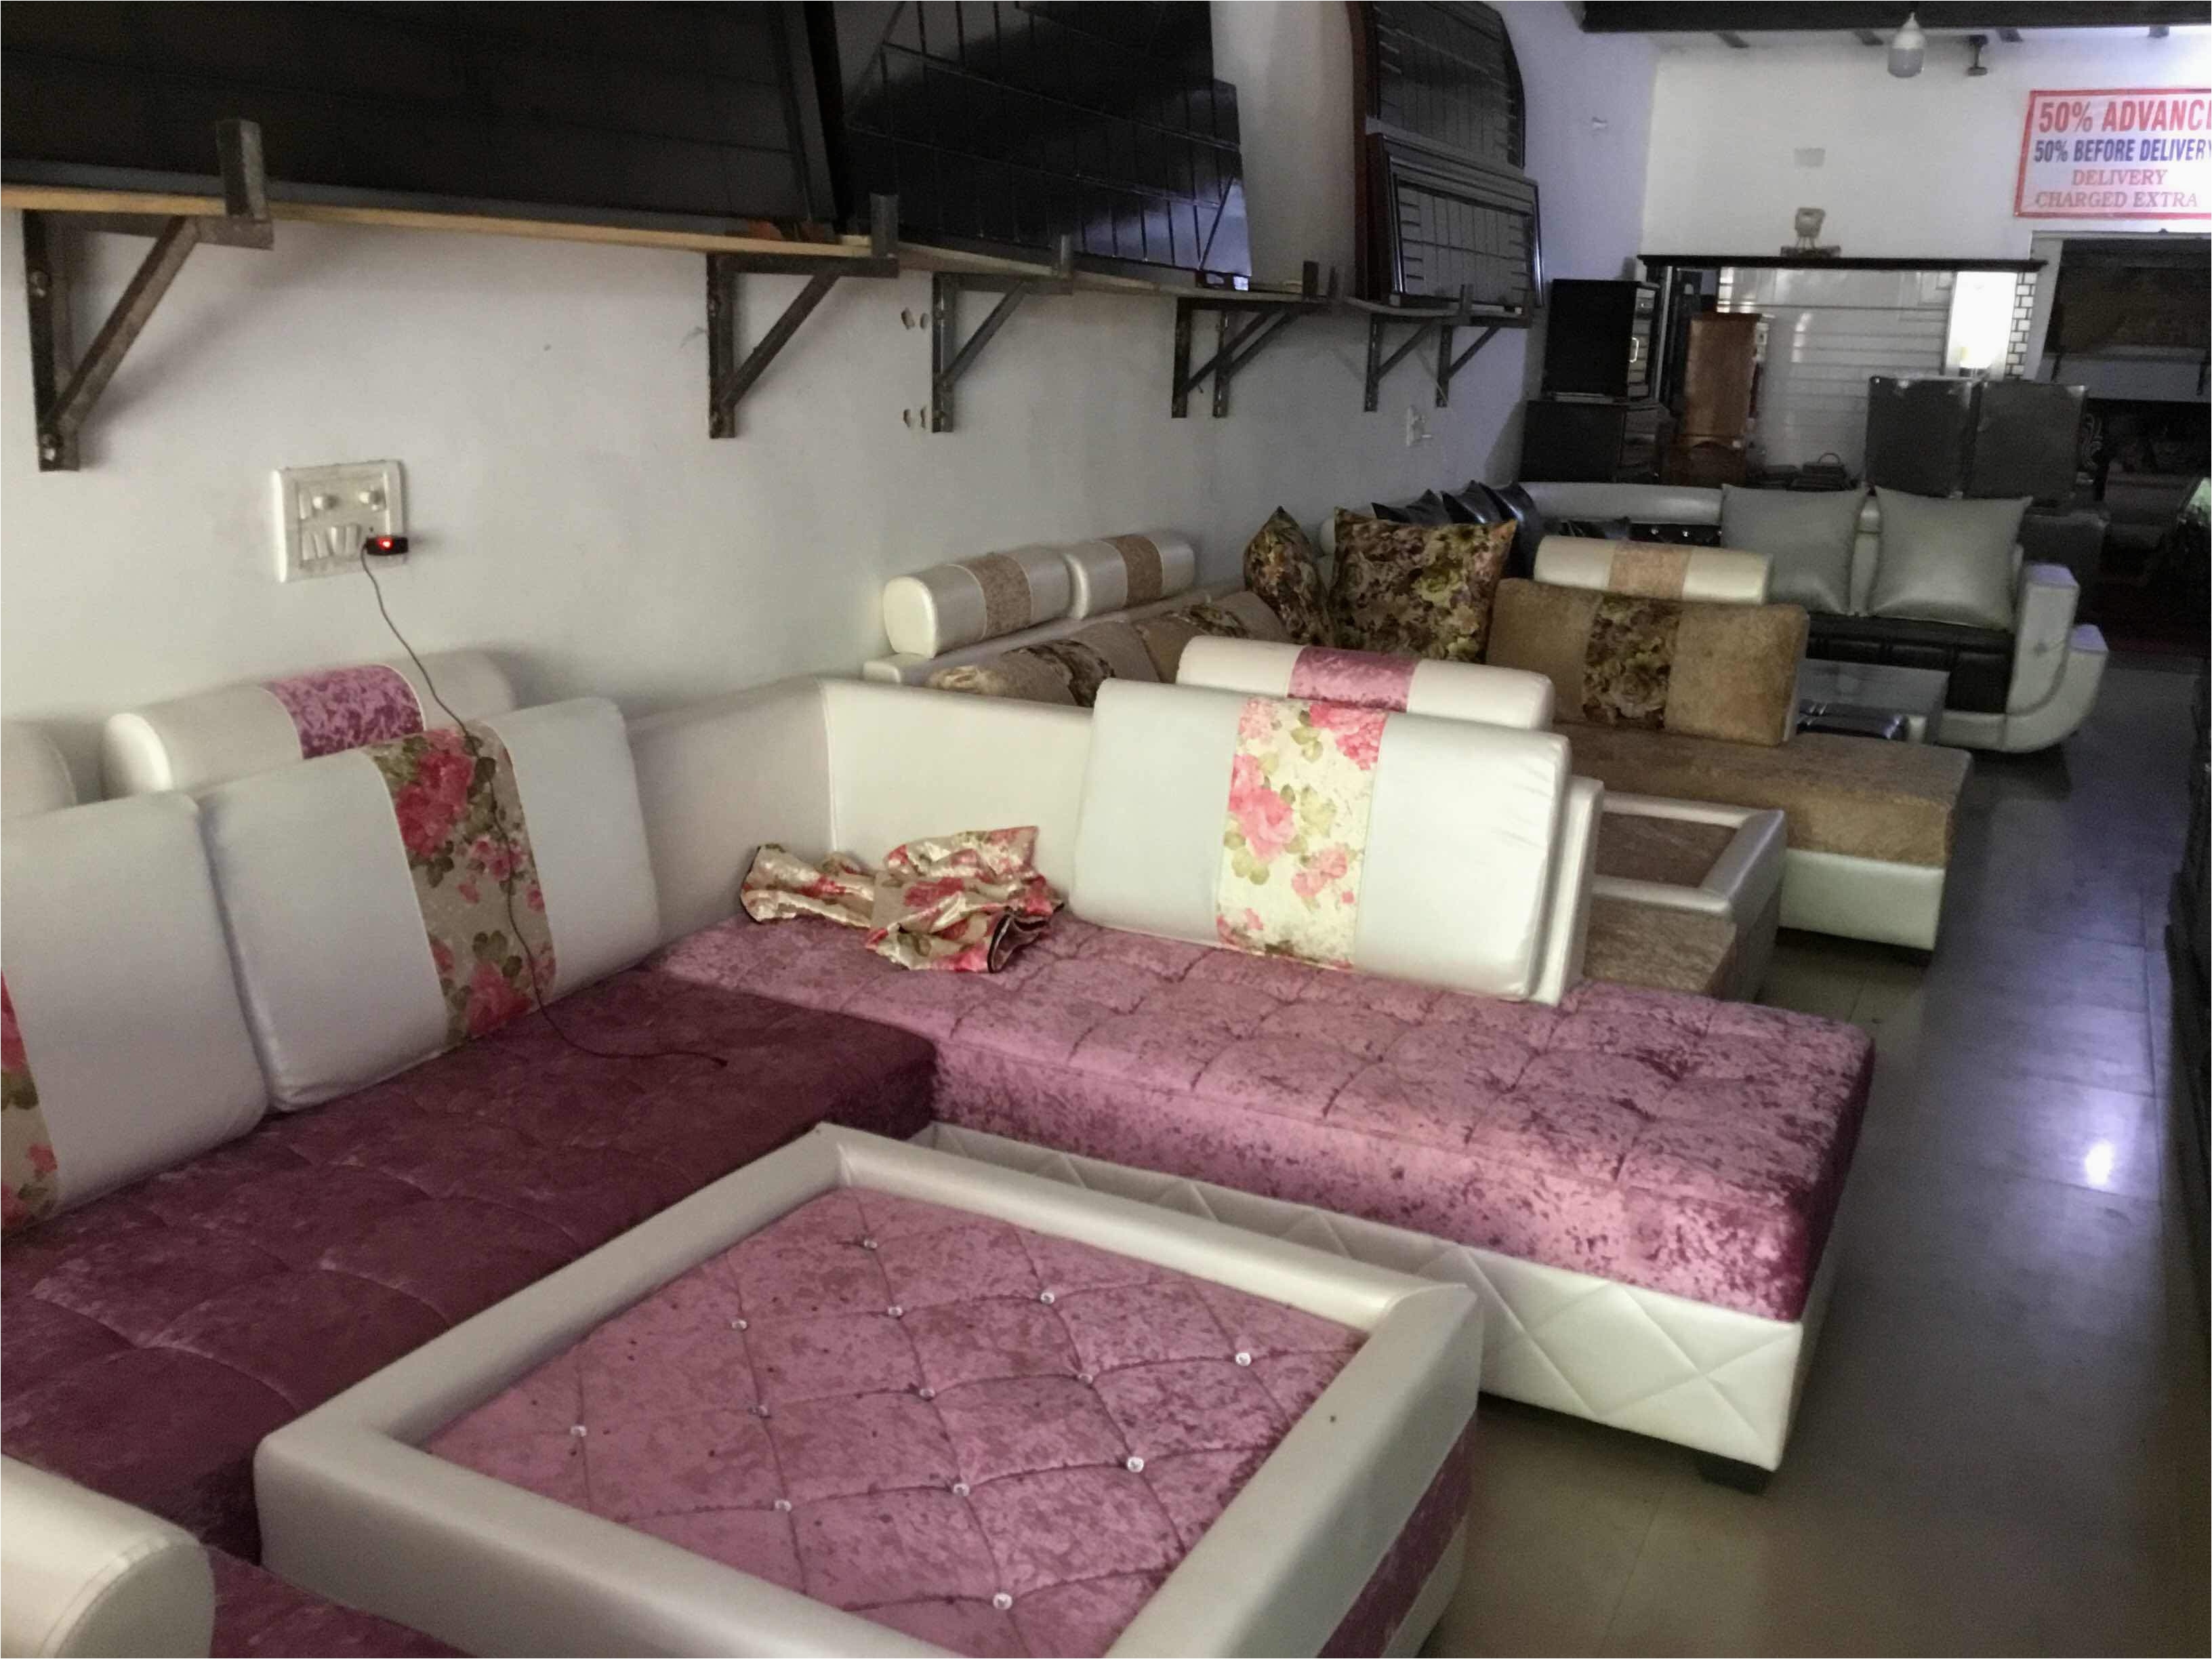 rent to own furniture online bad credit inspirational great wood furniture indirapuram interior designers in delhi